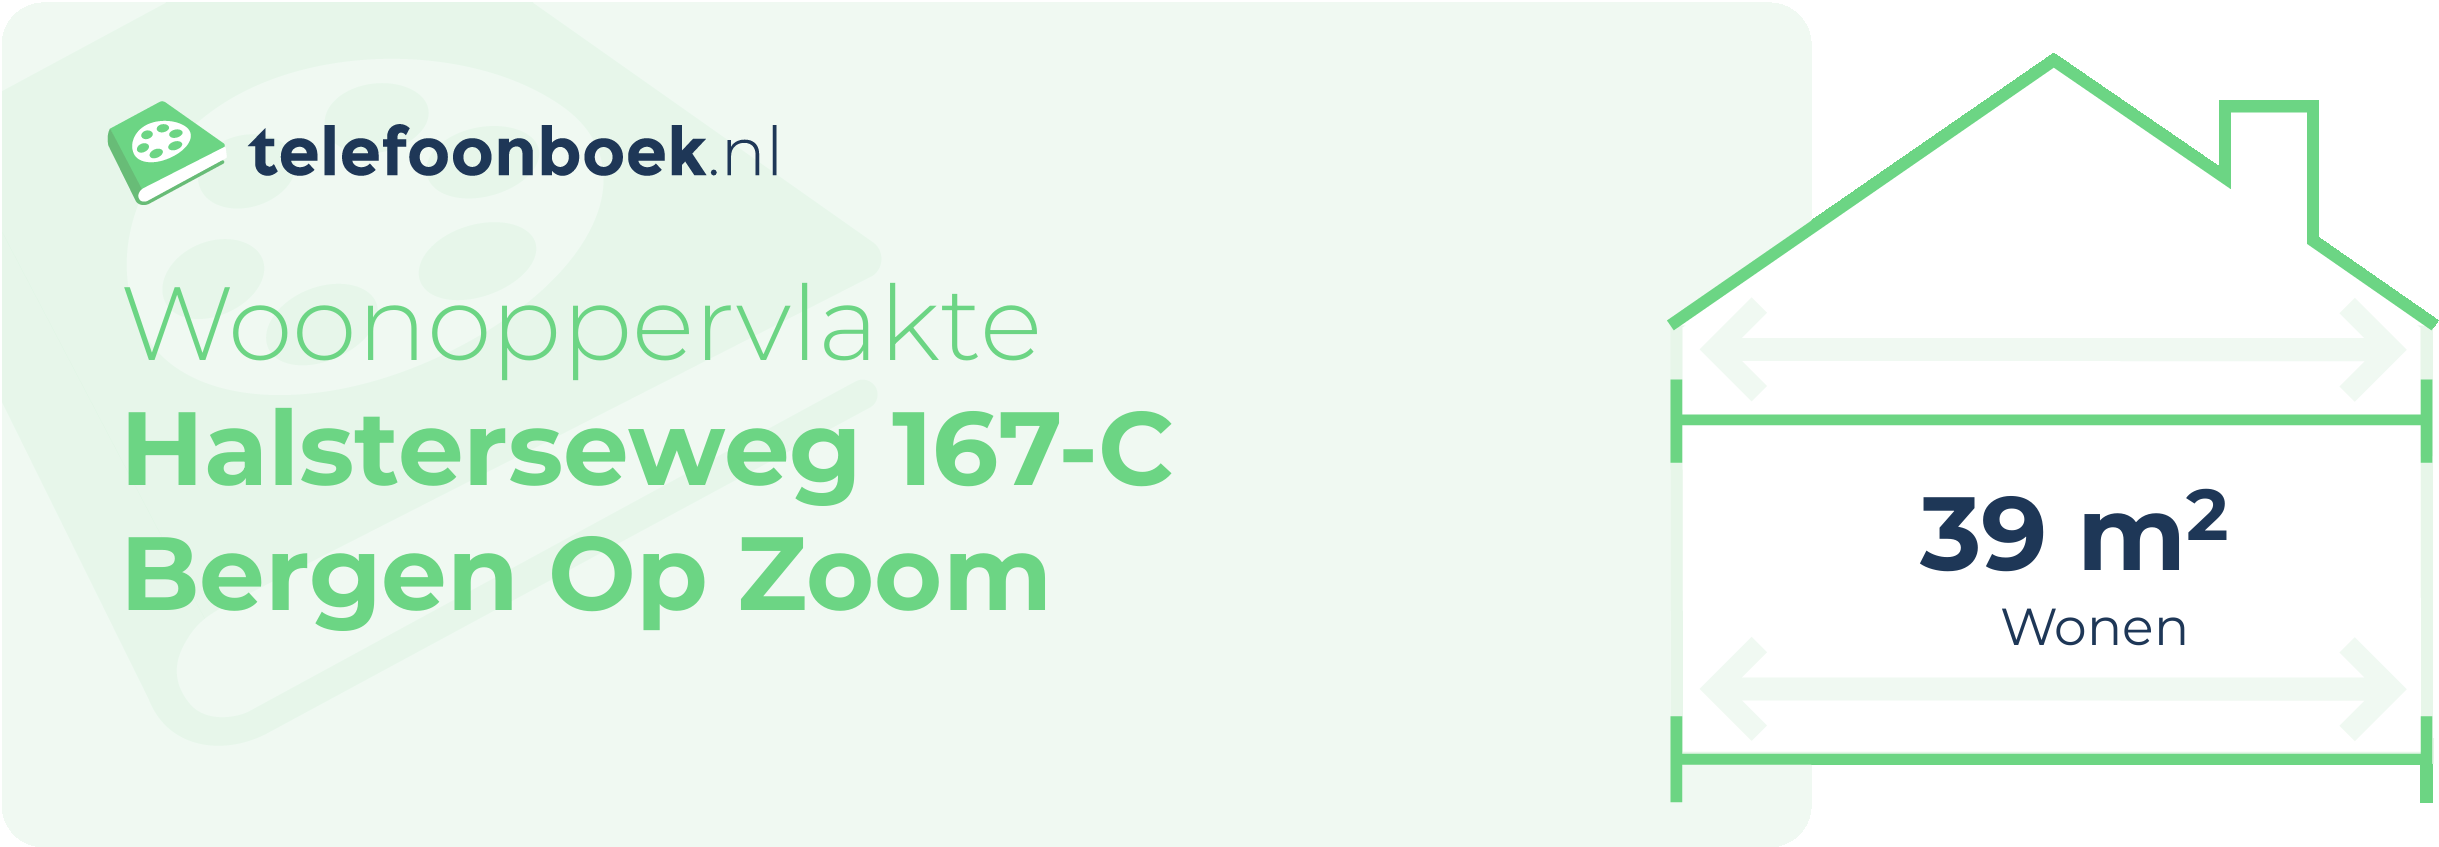 Woonoppervlakte Halsterseweg 167-C Bergen Op Zoom